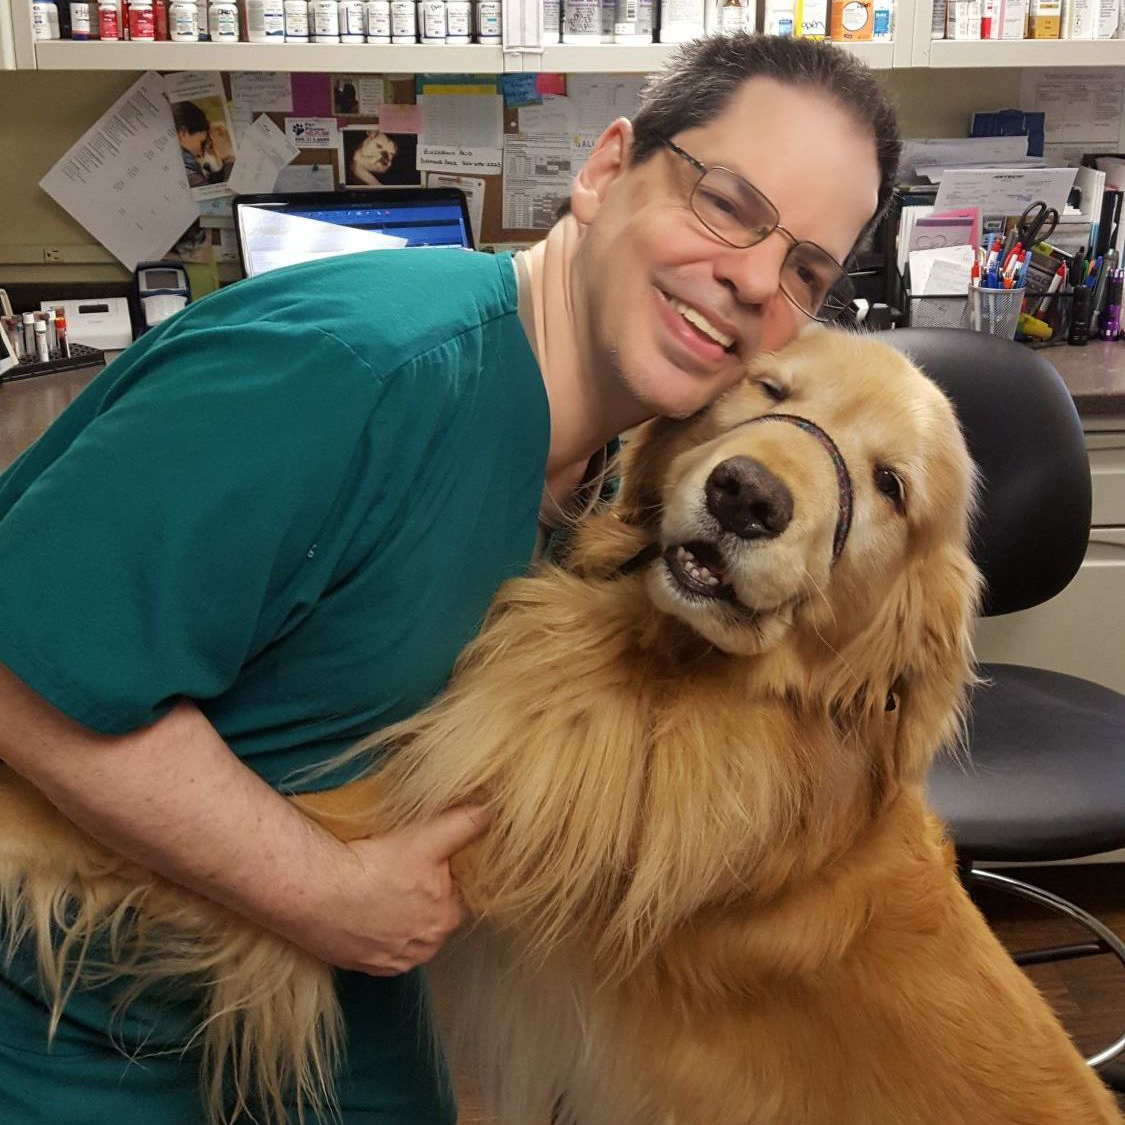 David G., Veterinary Assistant: